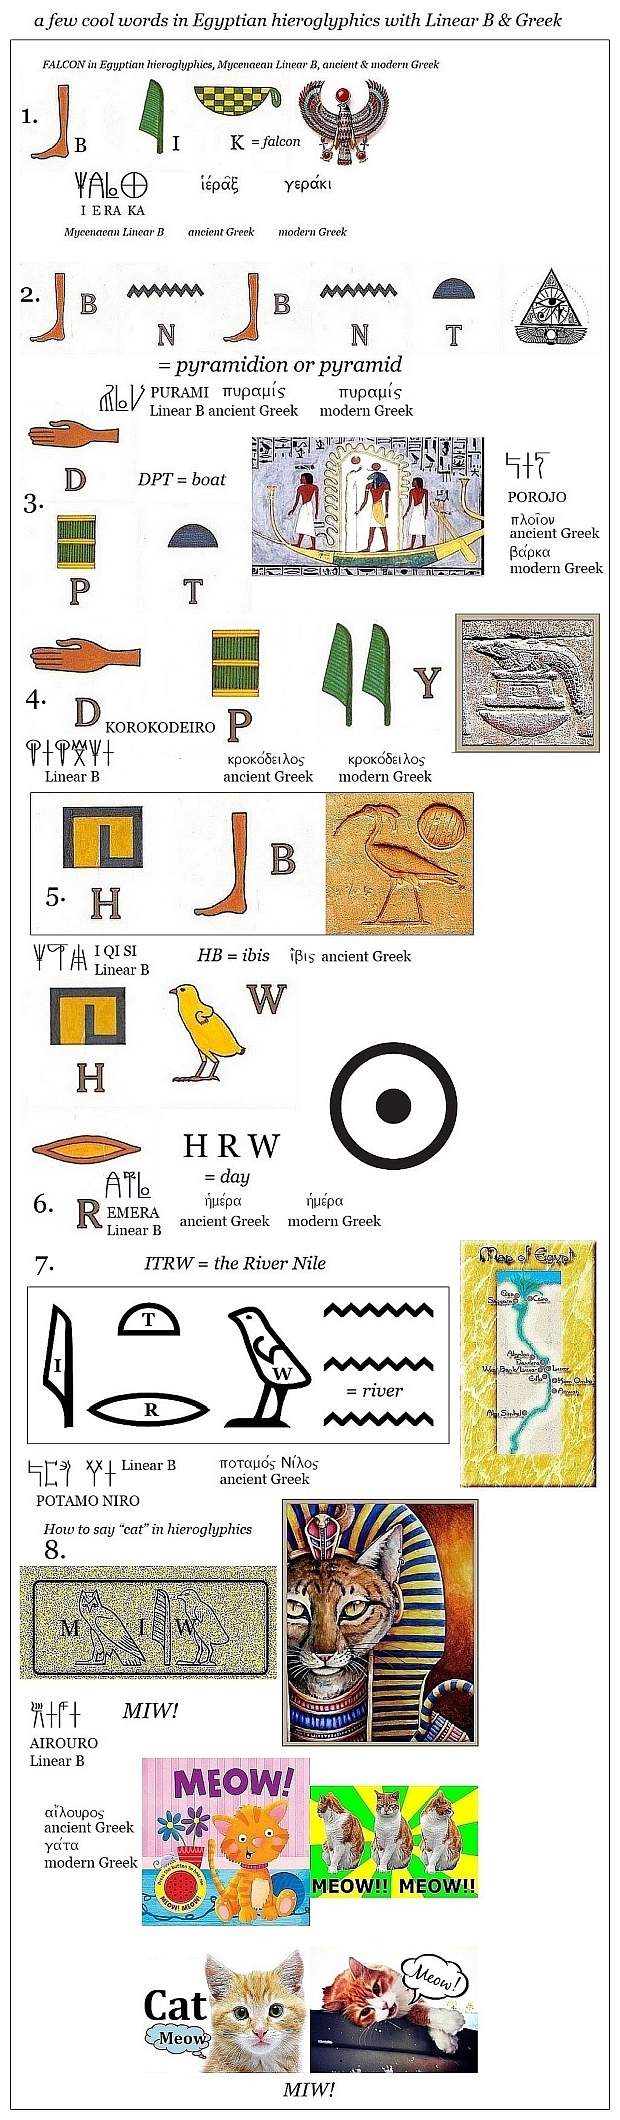 how to say 8 words in Egyptian hieroglyphics Linear B ancient Greek modern GreekLBKM